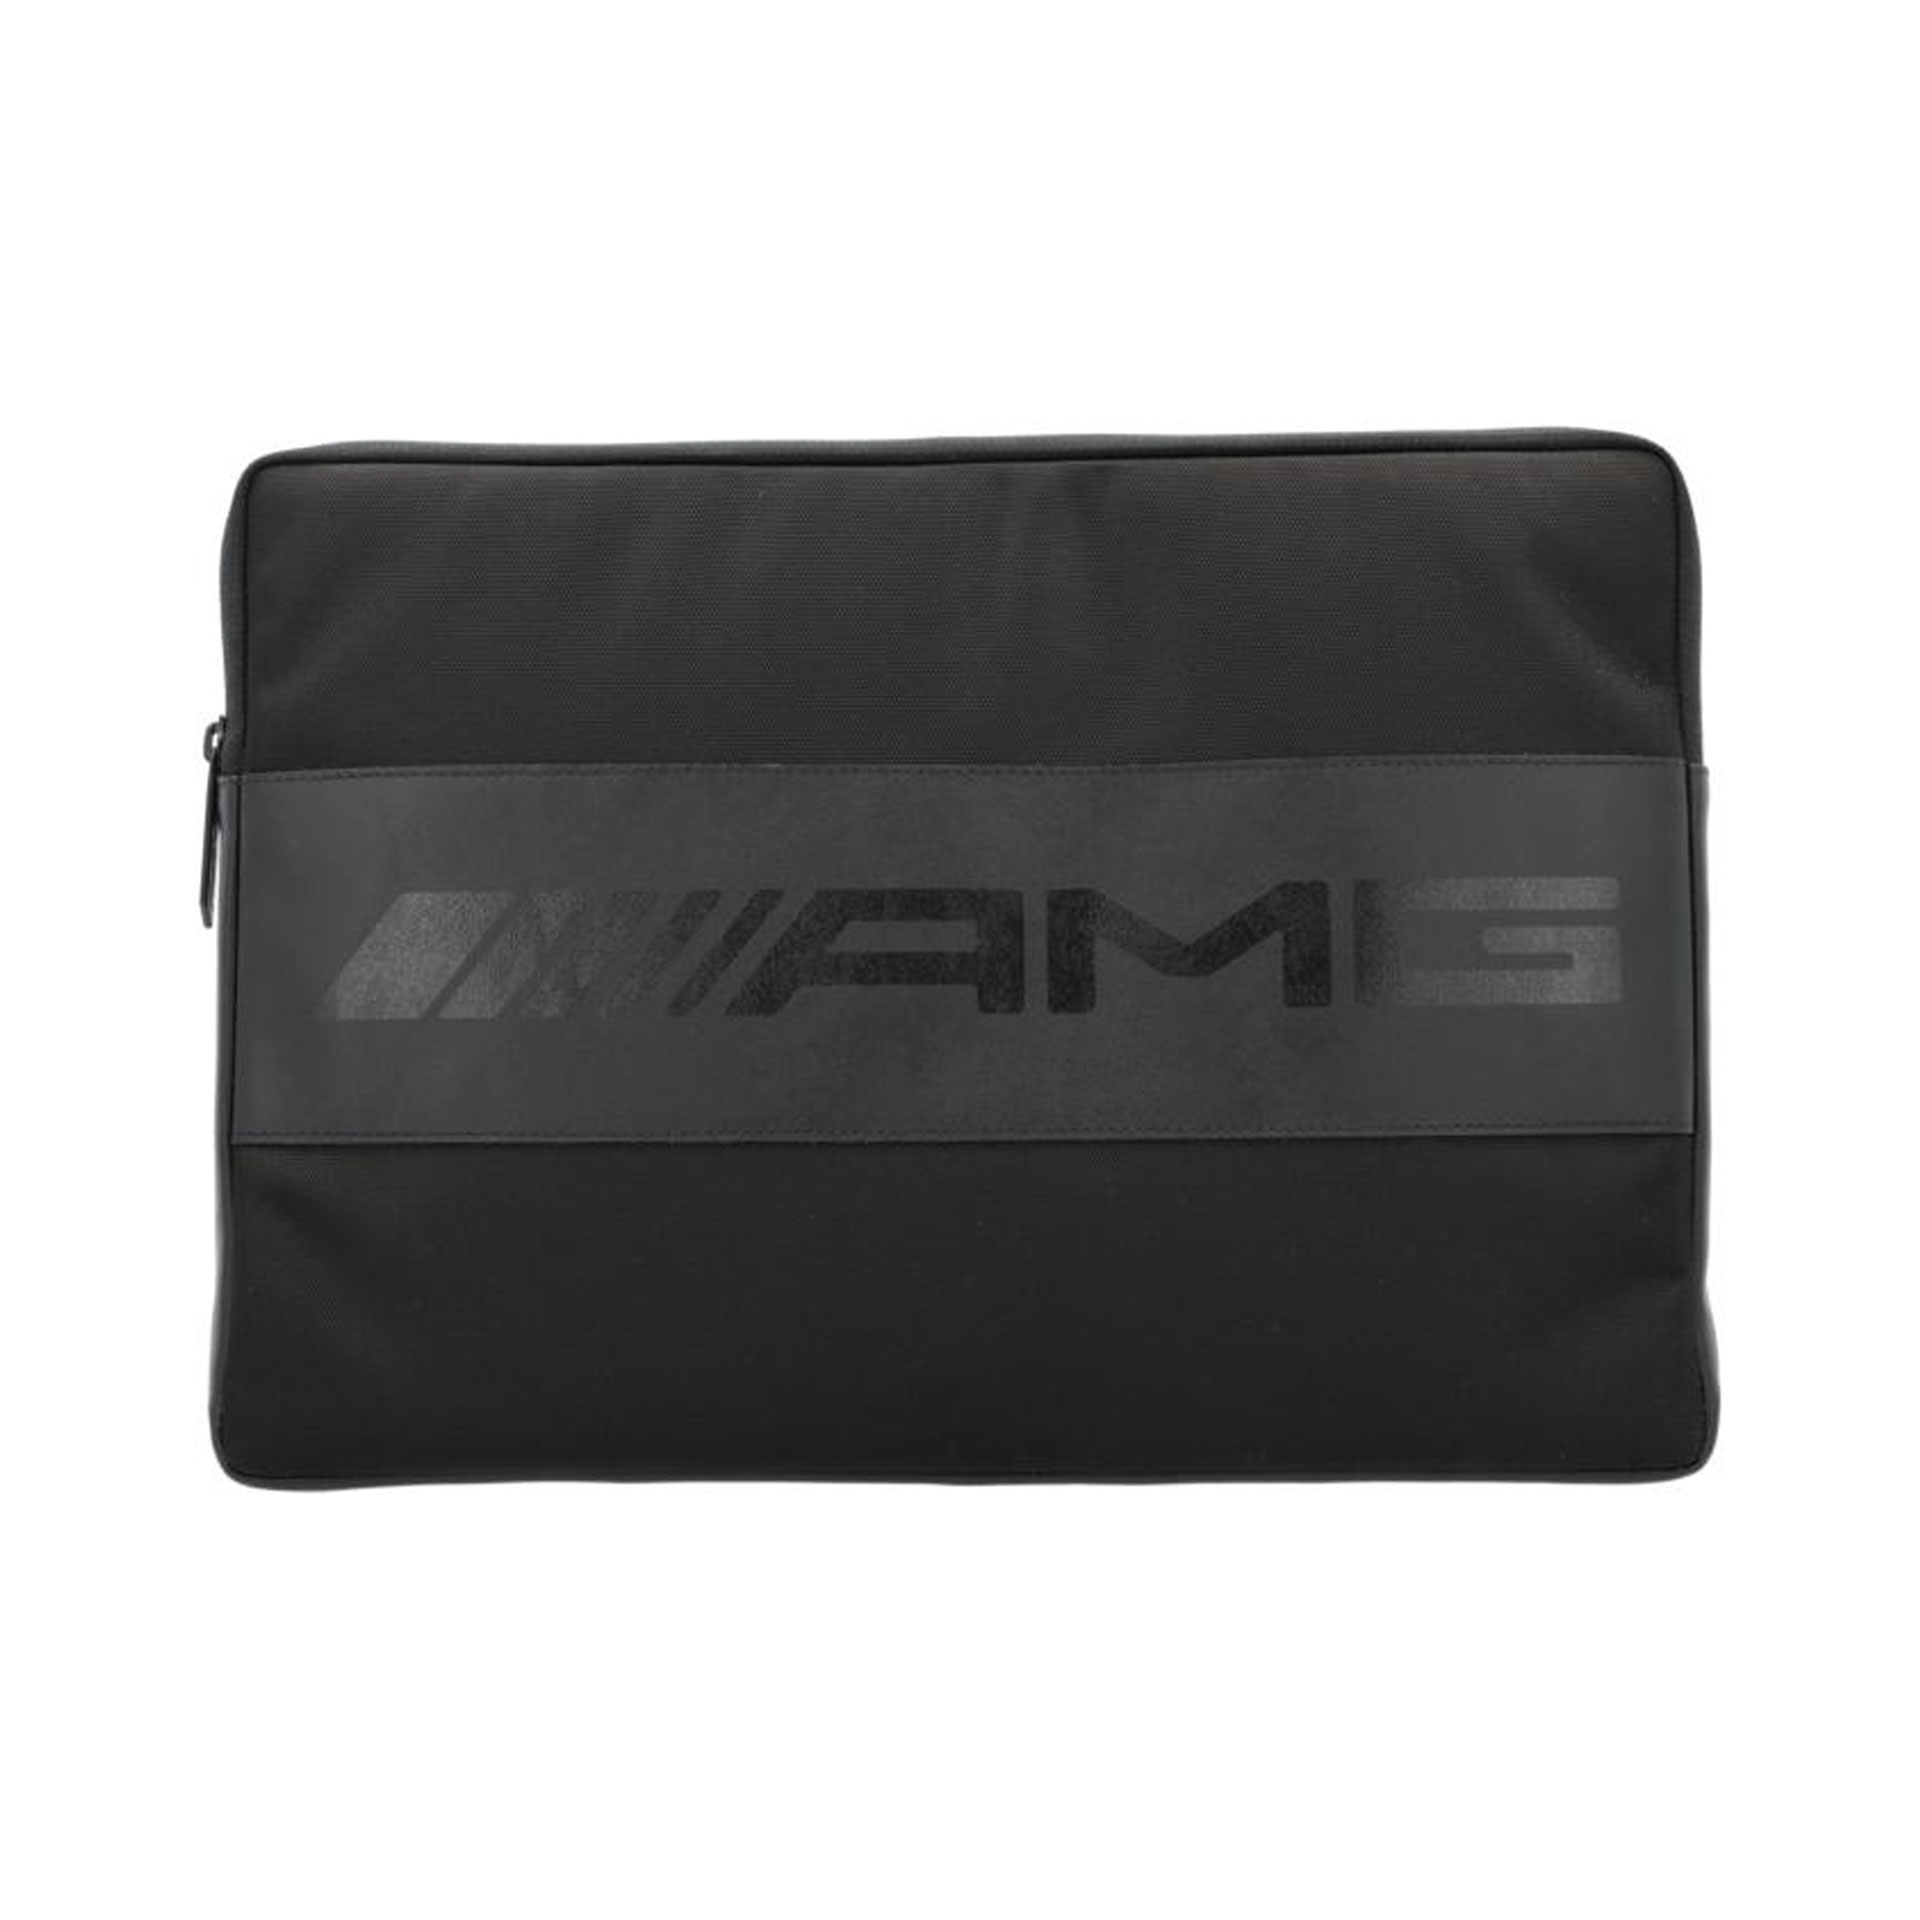 AMG Laptophülle schwarz Rindleder/Nylon bis 13 Zoll